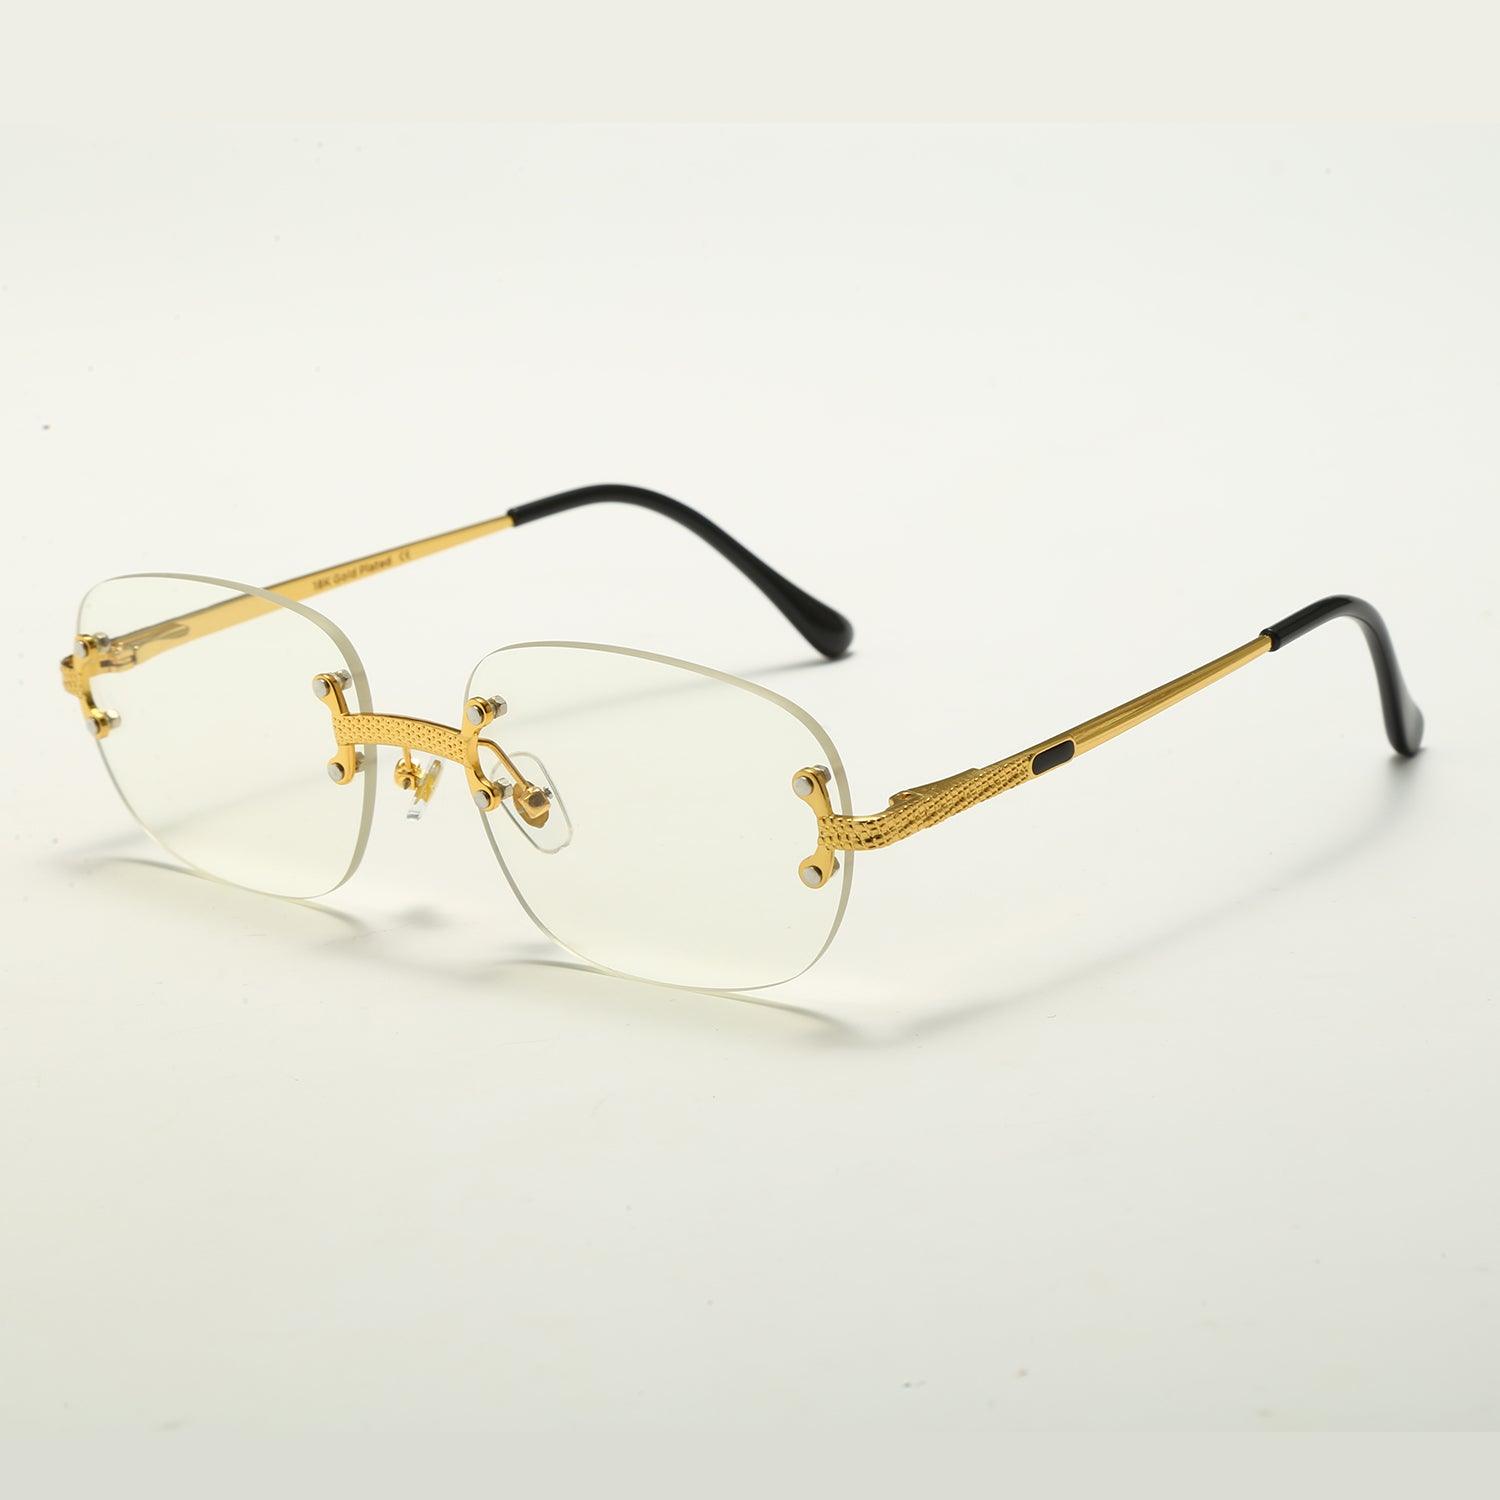 (6 PACK) High-quality 18K Covered Gold Oval Rimless Sunglasses For Men Luxury Frame - Bulk Sunglasses Wholesale